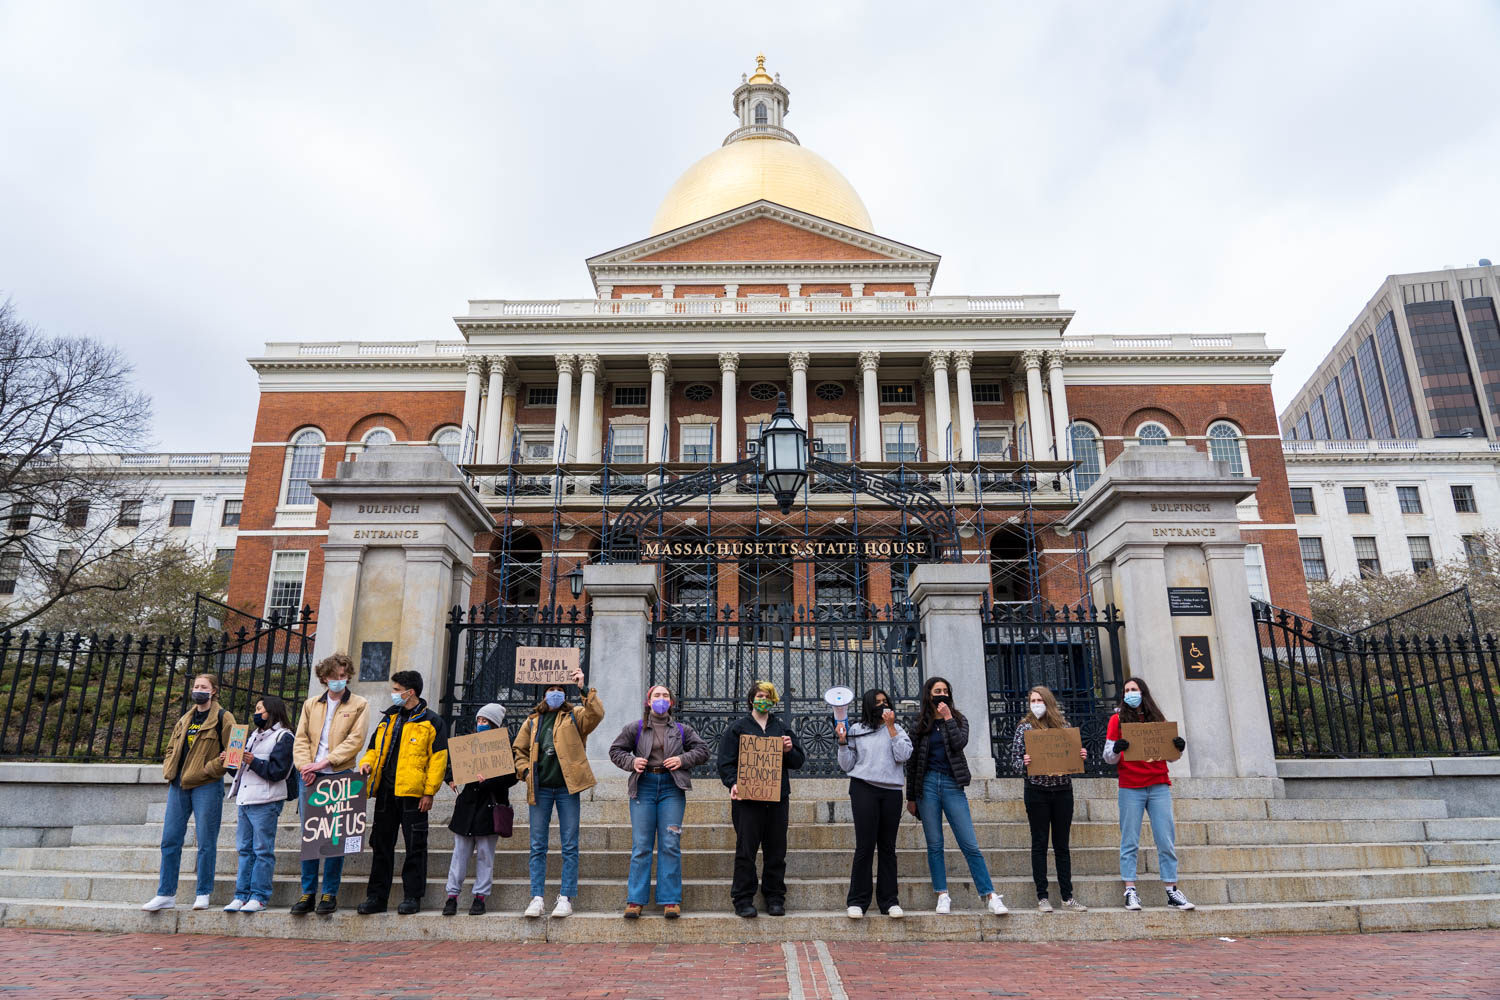 Climate Strike outside of Massachusetts State House